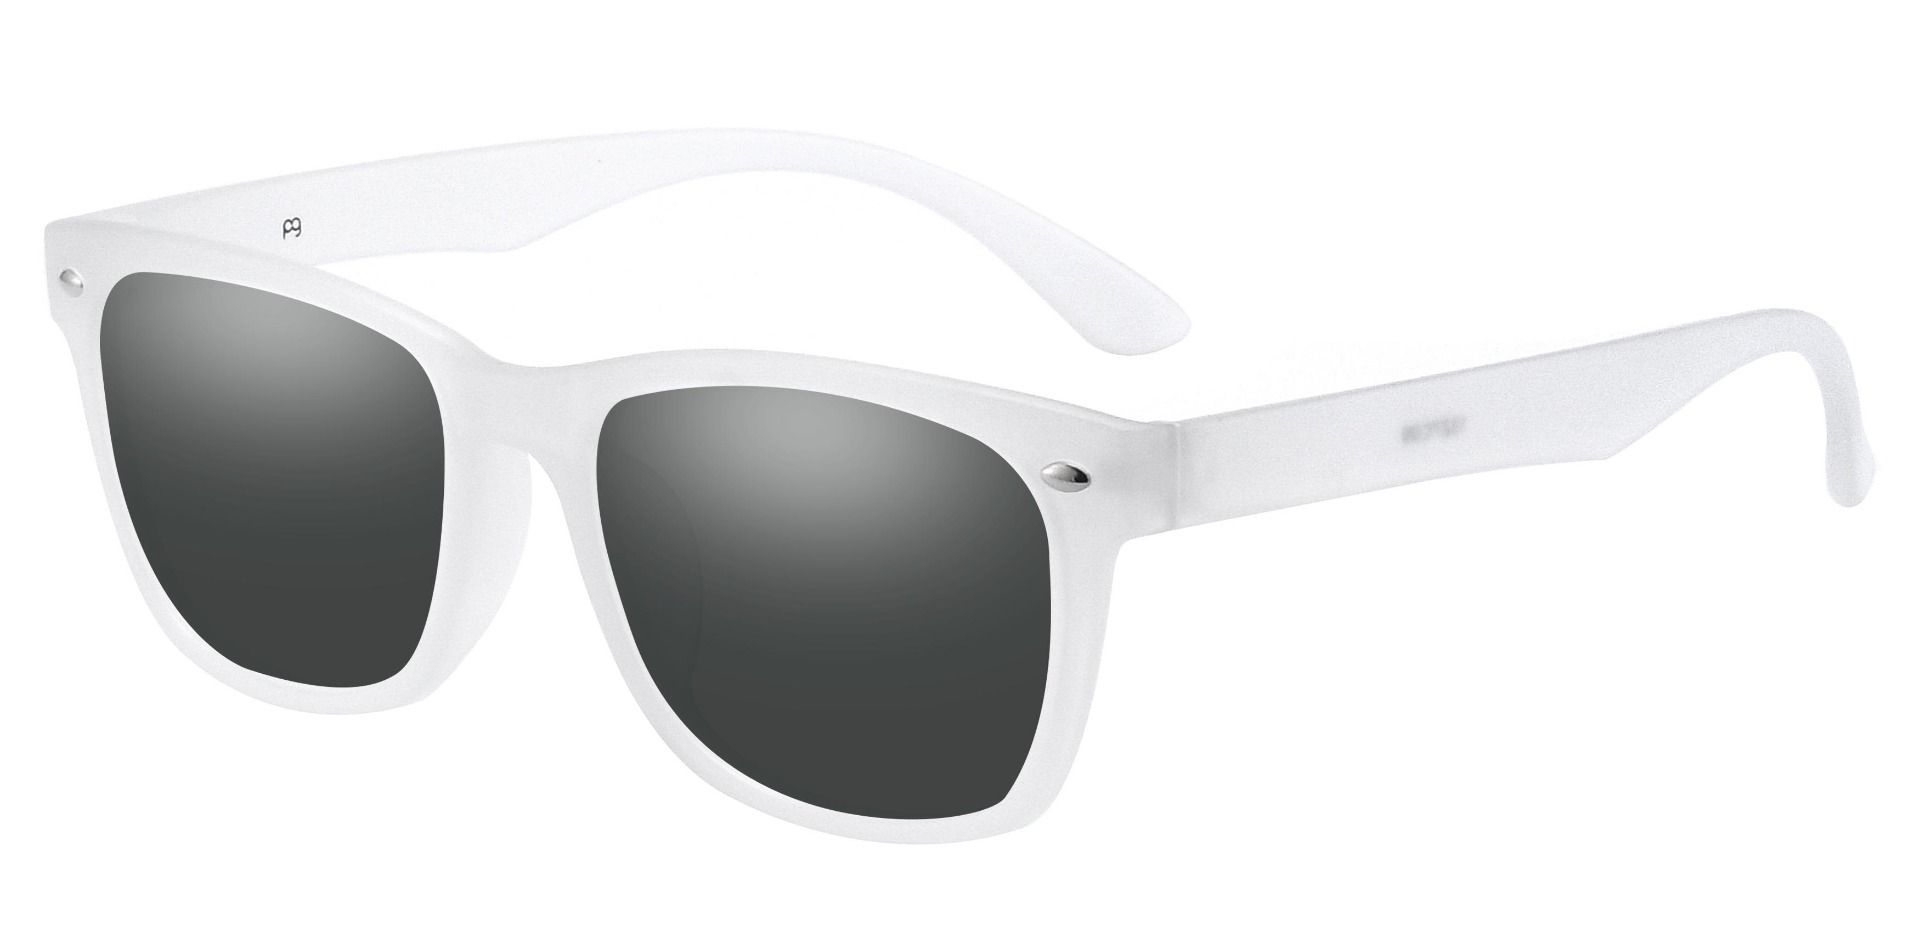 Anderson Classic Square Prescription Sunglasses -  Clear Frame With Gray Lenses